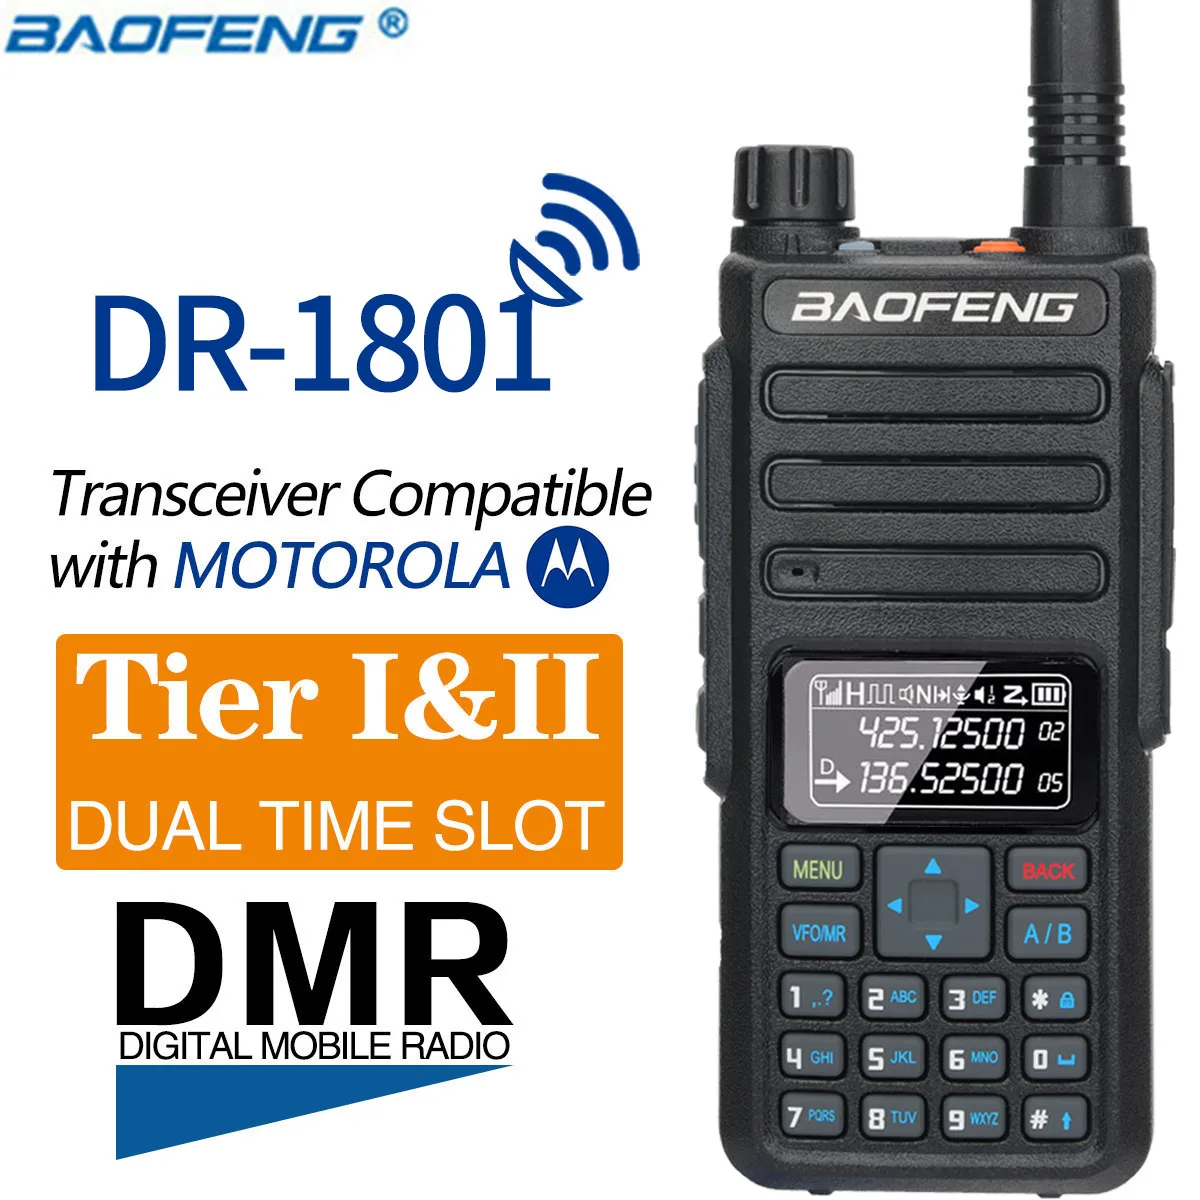 New Baofeng DR-1801 Tier 1+2 Dual Time Slot Digital Walkie Talkie DM-1801 Updated UV Dual Band 136-174 & 400-470MHz DMR Radio